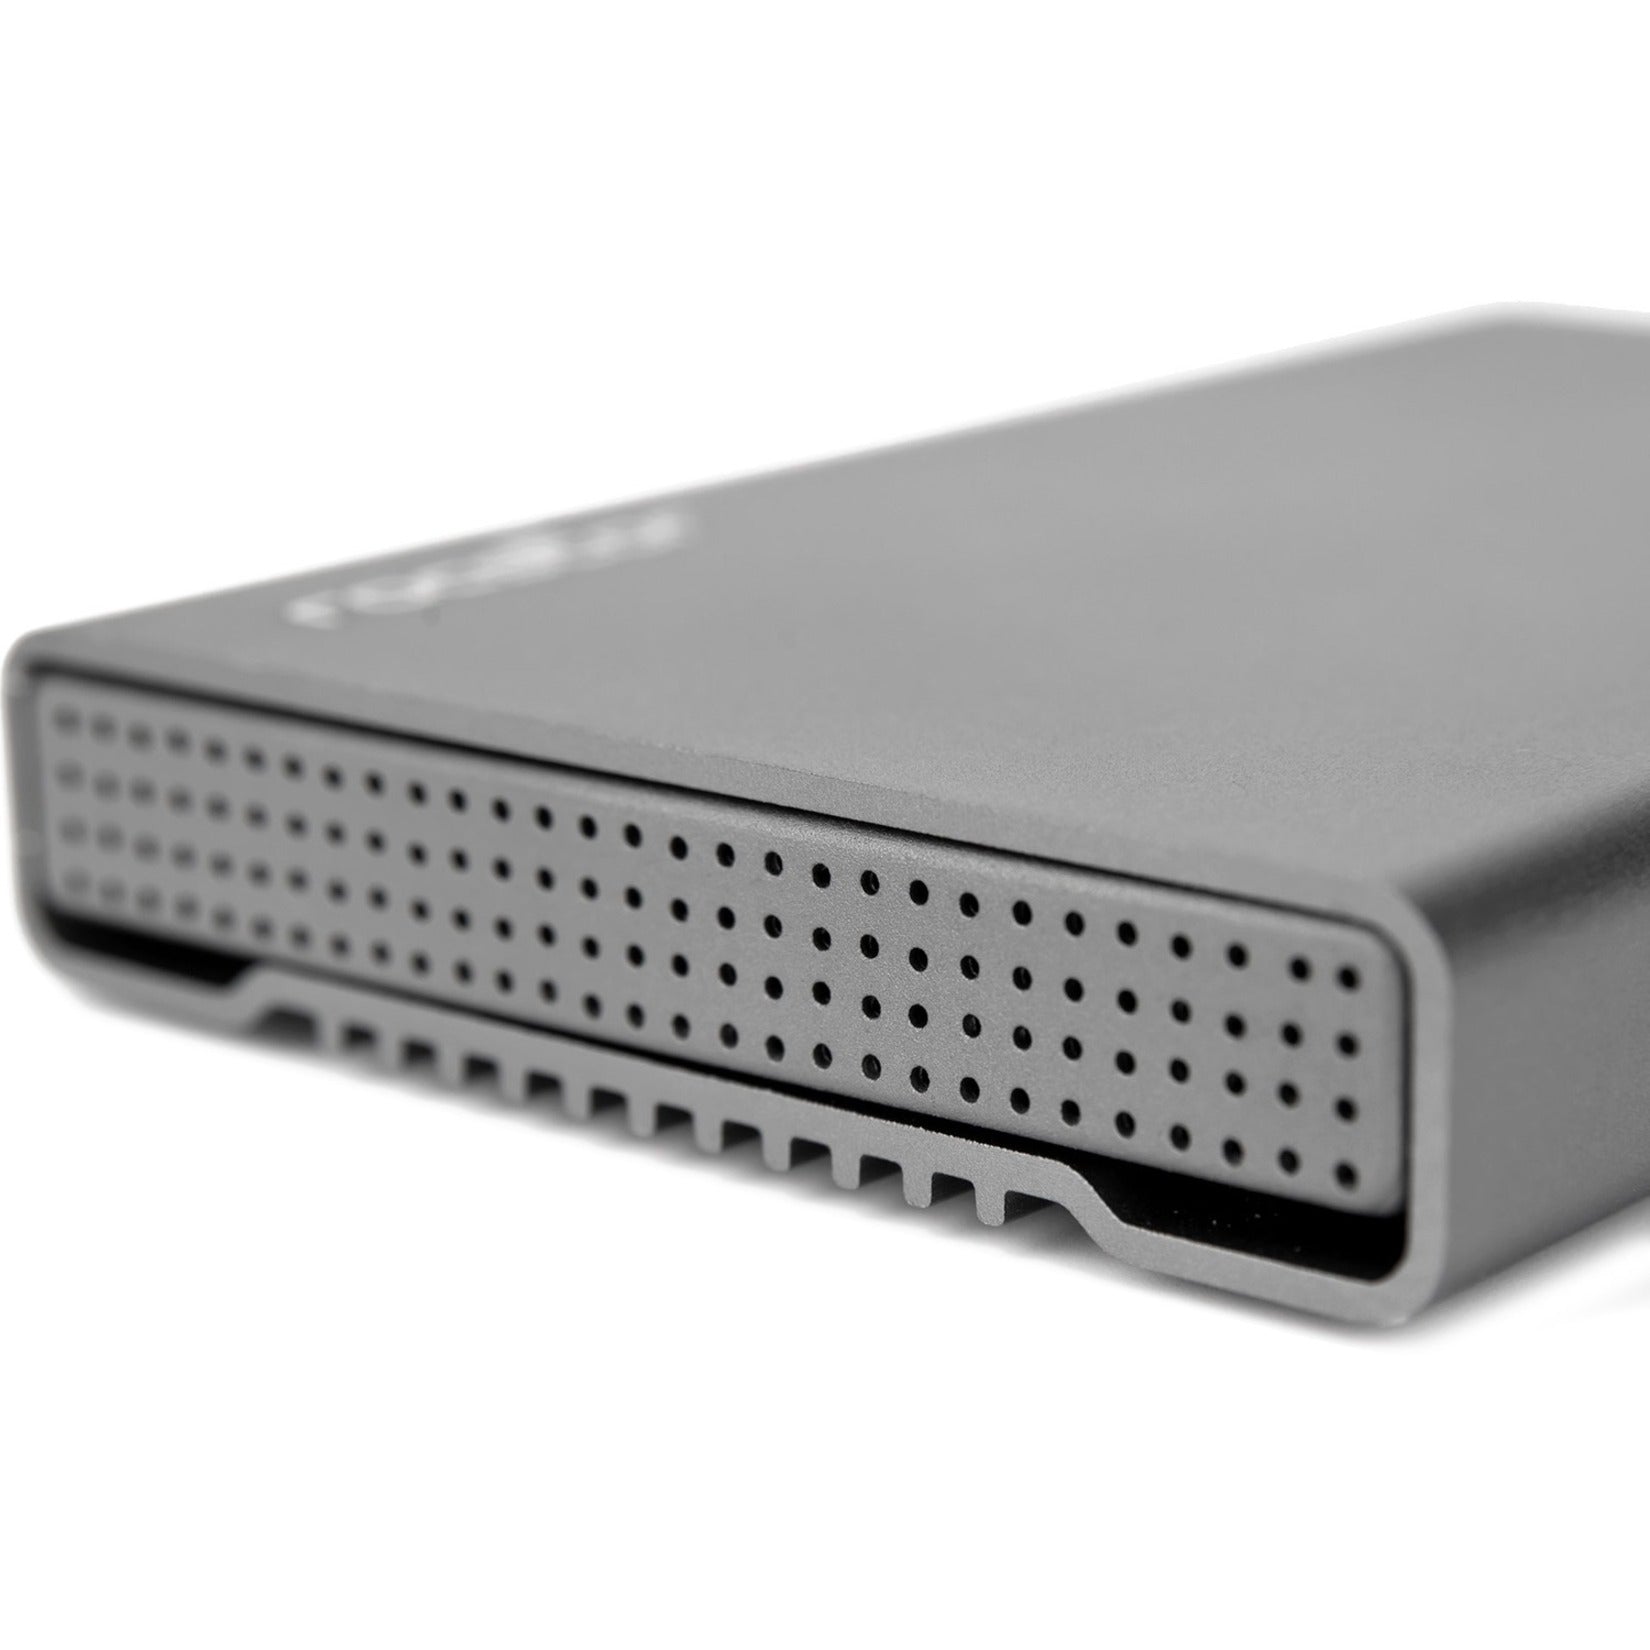 Rocstor GP3606-01 Rocpro P33 2TB Portable USB 3.1 Gen2 10Gbps USB 3.0 External Hard Drive, Aluminum Gray